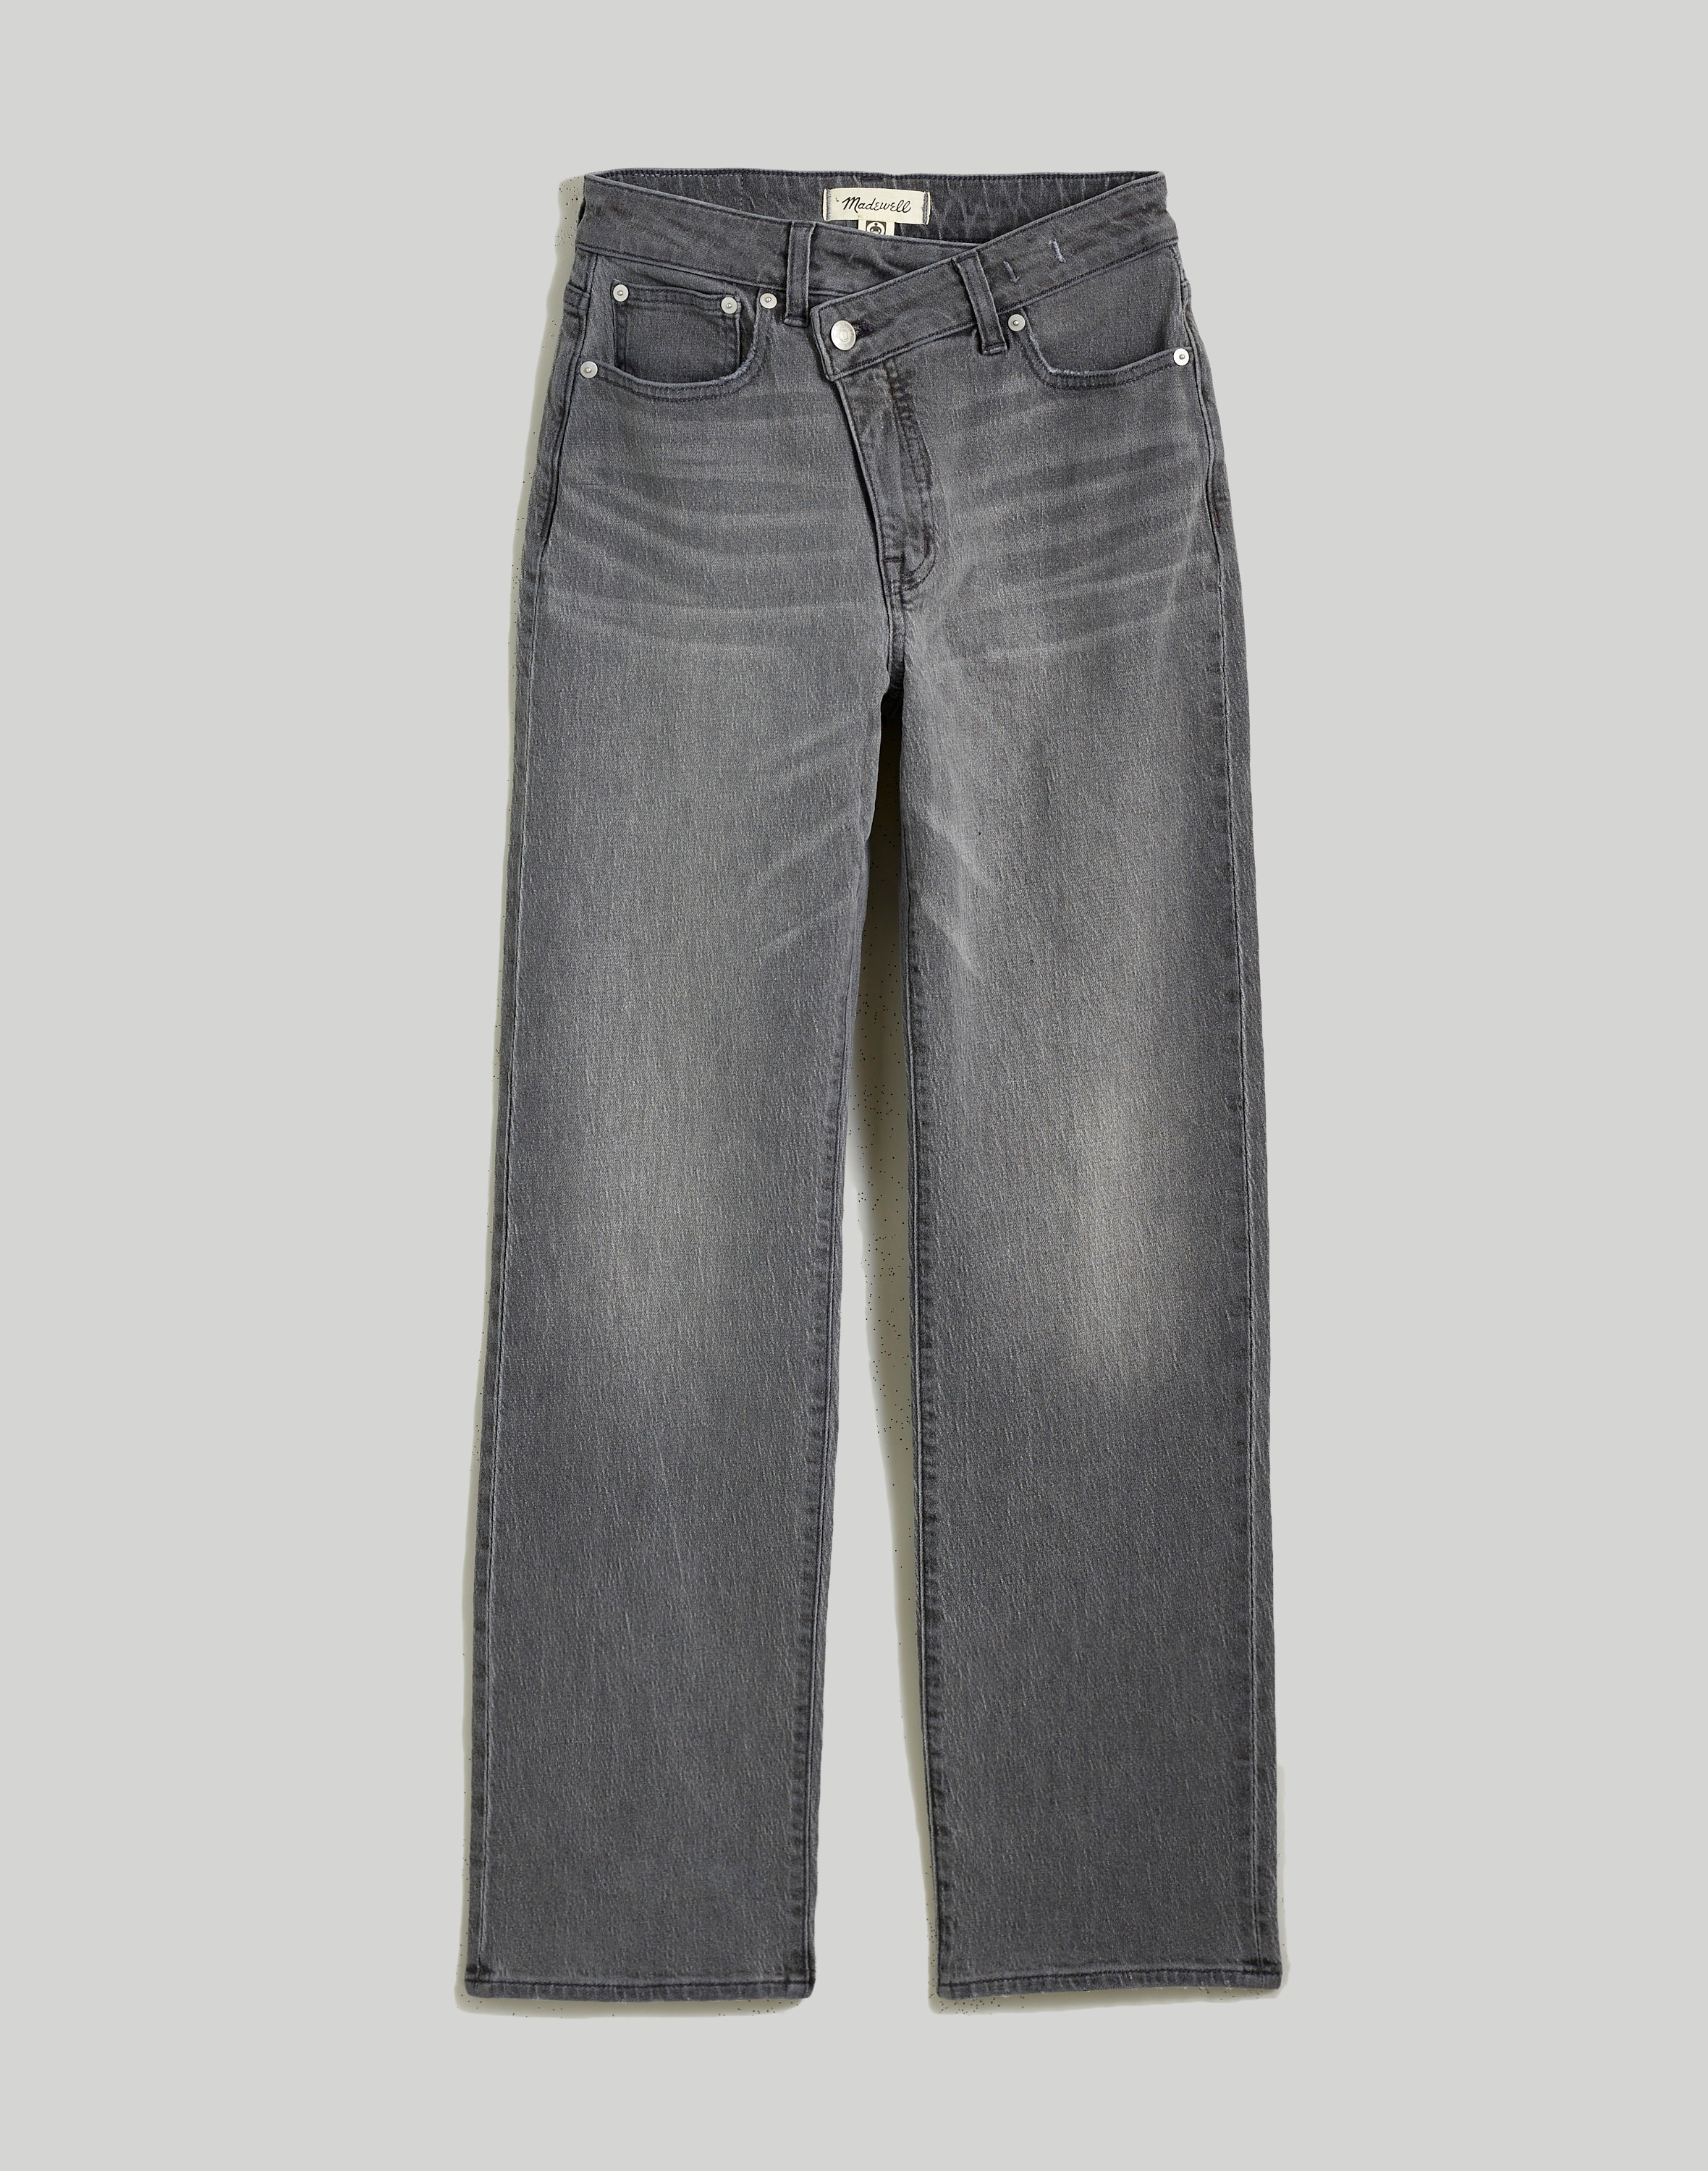 The Curvy '90s Straight Jean in Burwick Wash: Cross-Tab Edition